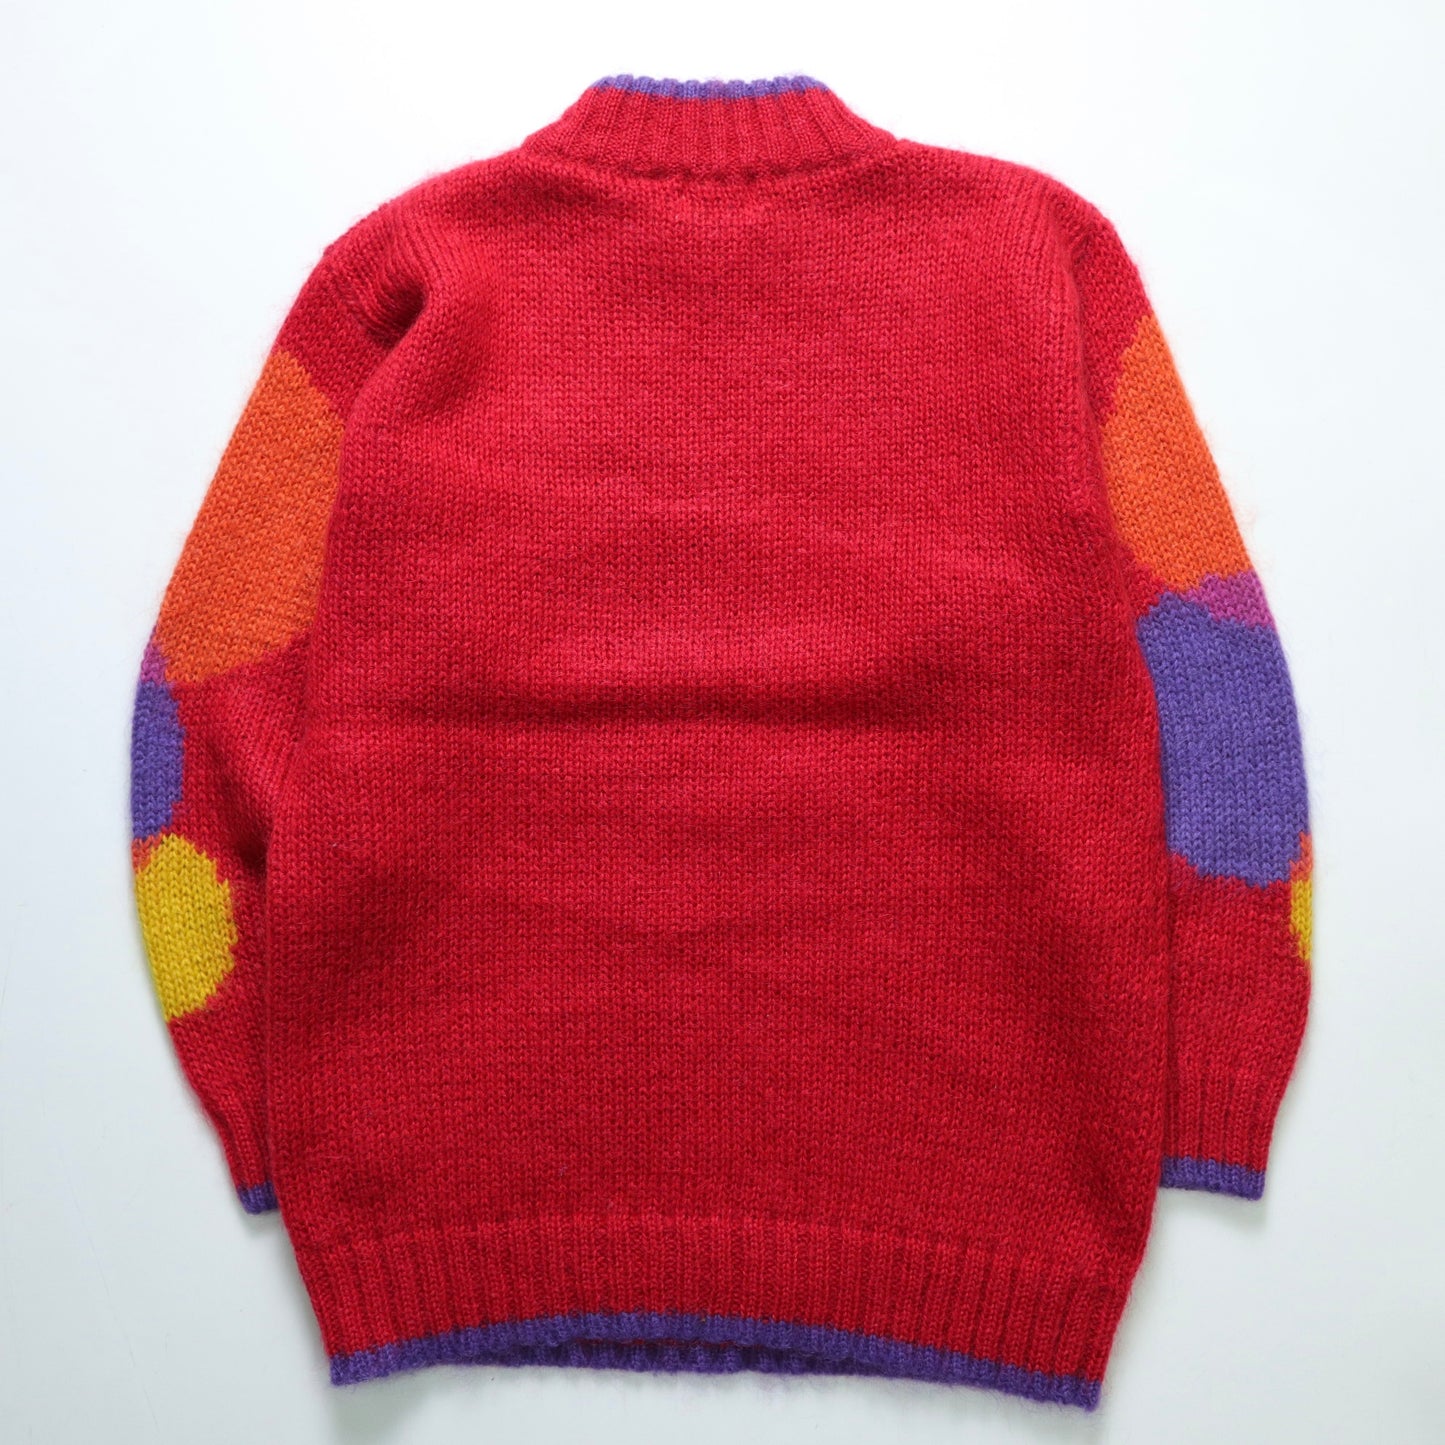 90s Mohair red bottom polka dot sweater made in Hong Kong